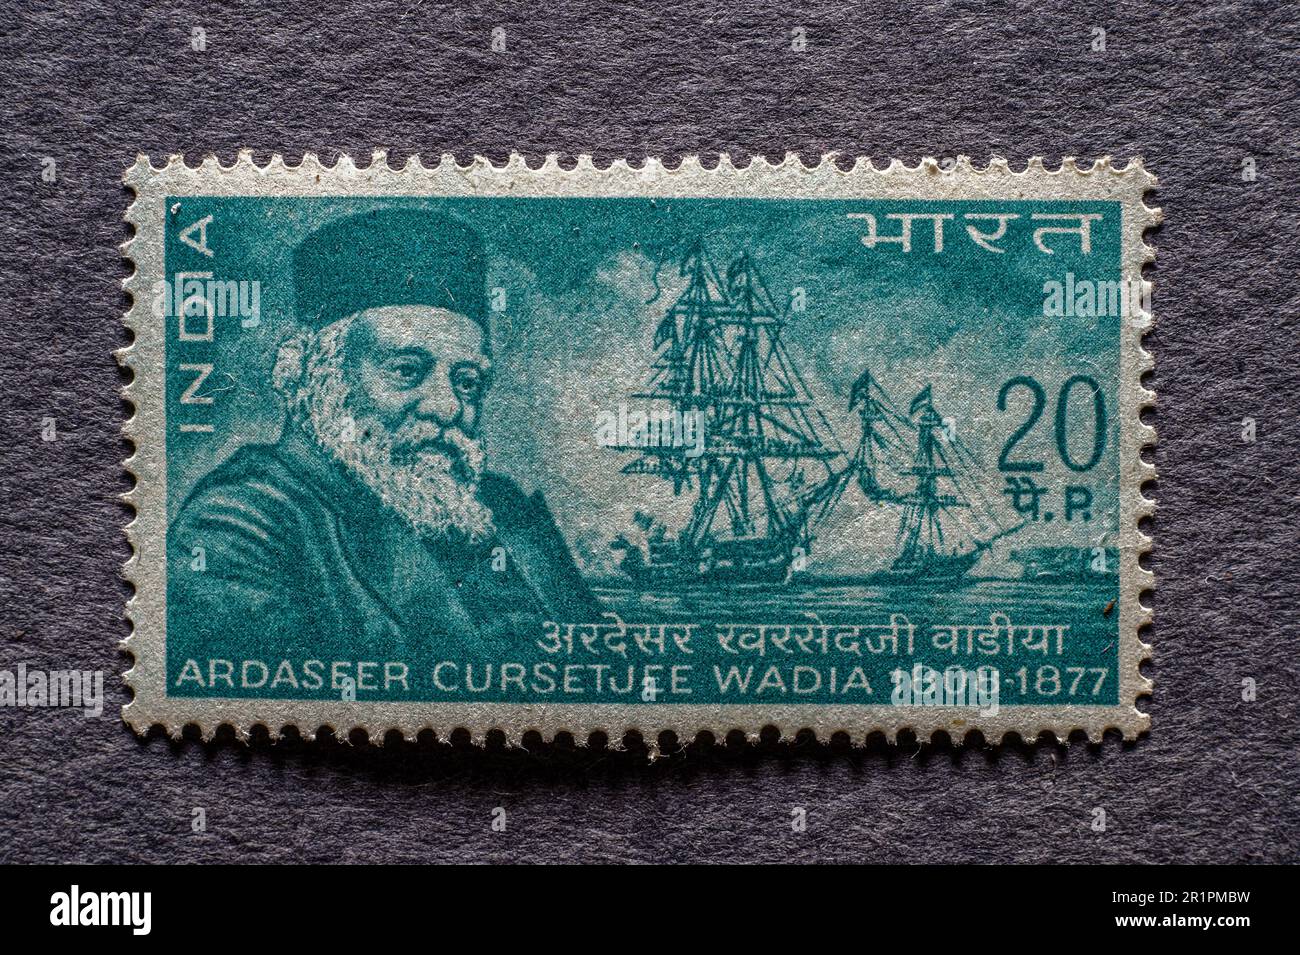 09 13 2015  Vintage Postal Stamp of Parsi Ardaseer Cursetjee Wadia,1808-1877 Studioshot Lokgram Kalyan Maharashtra India.Asia. Stock Photo